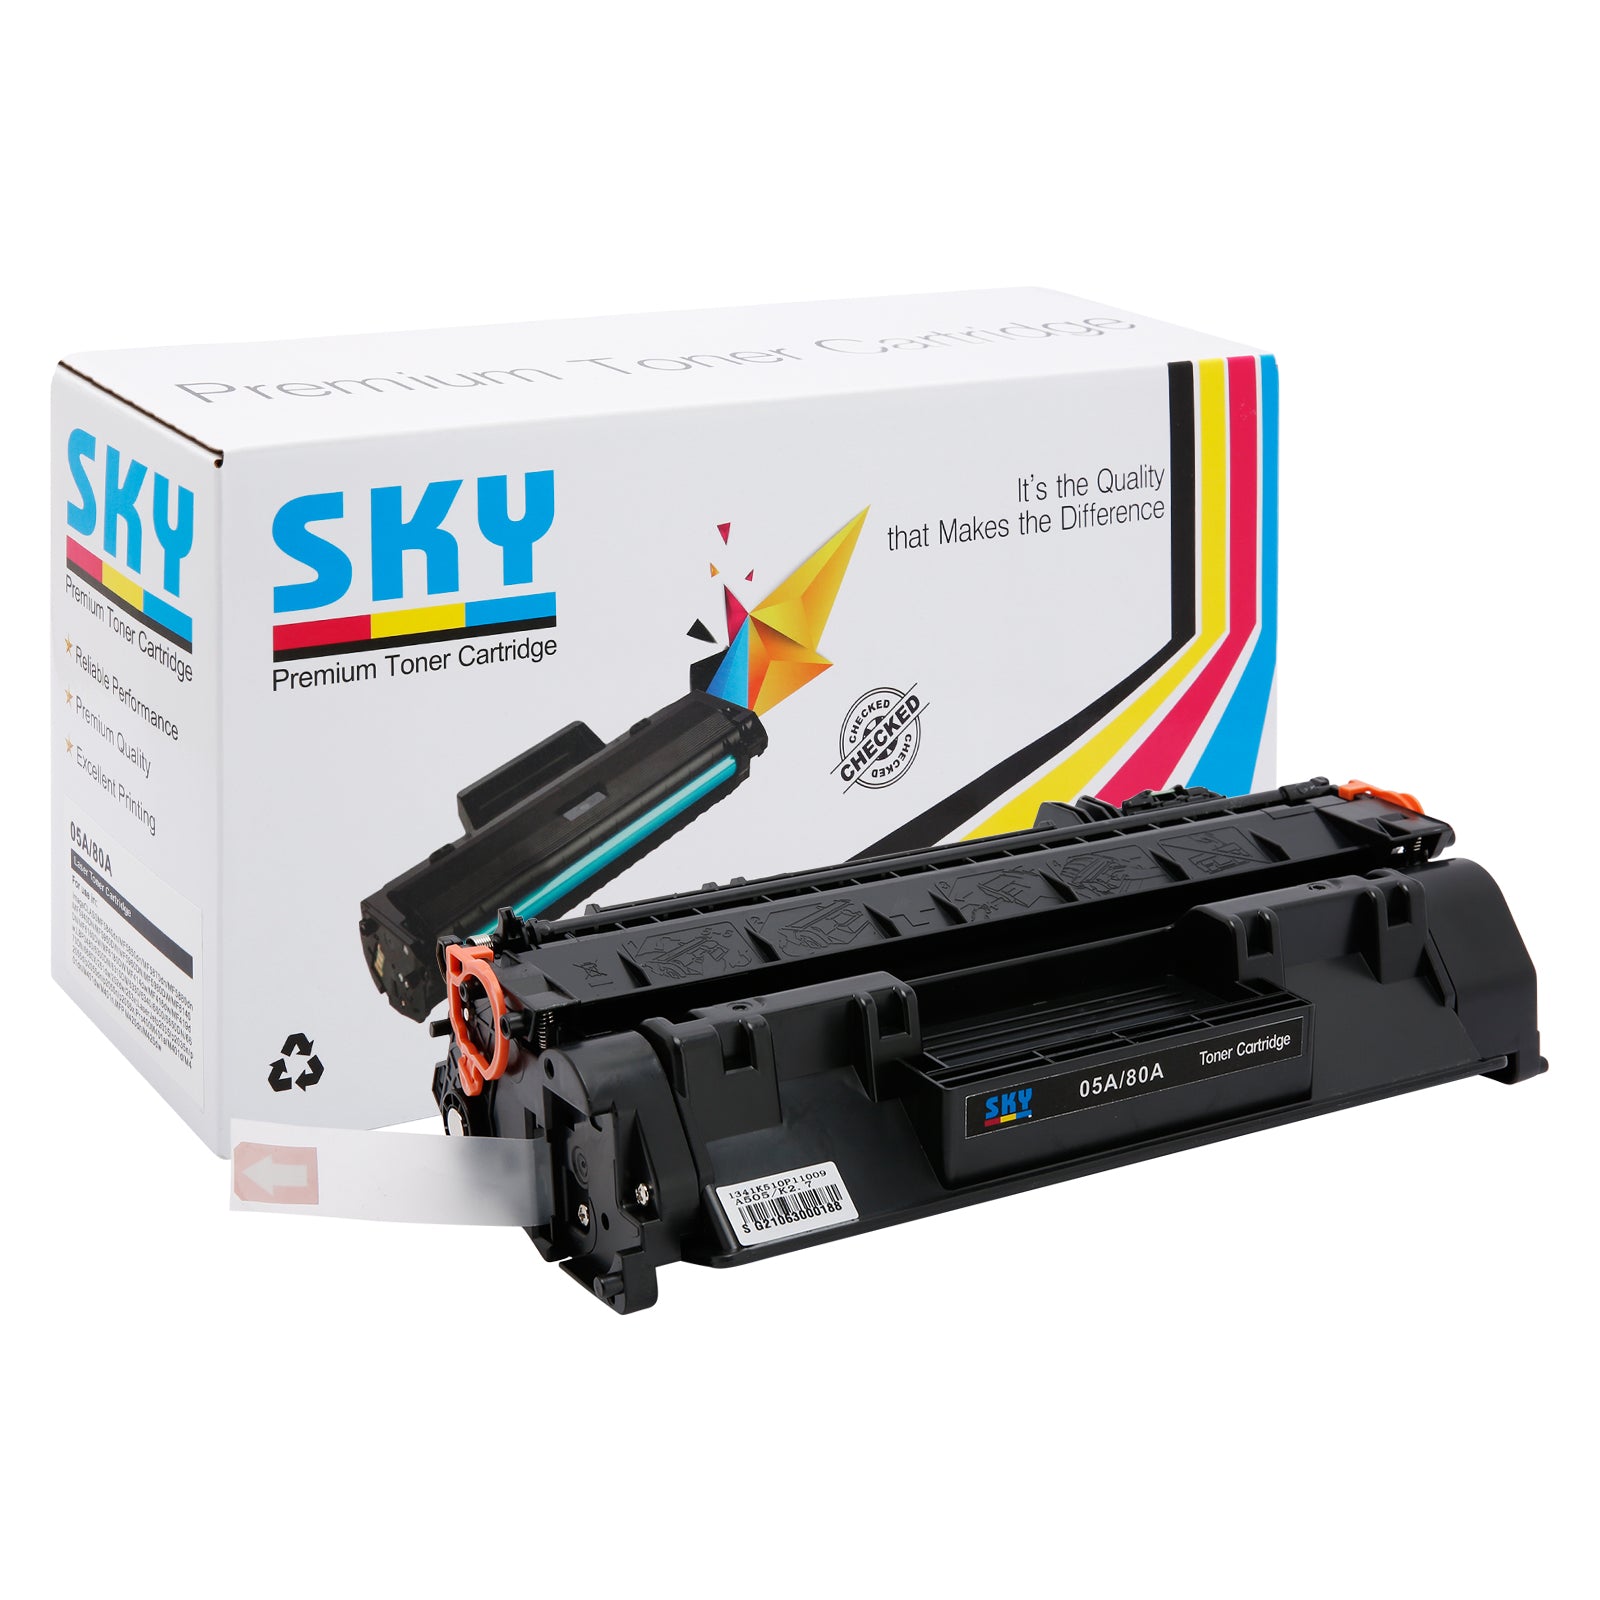 SKY 80A Toner Cartridge CF280A for HP Laserjet Pro 400 M425 M401 series Printers